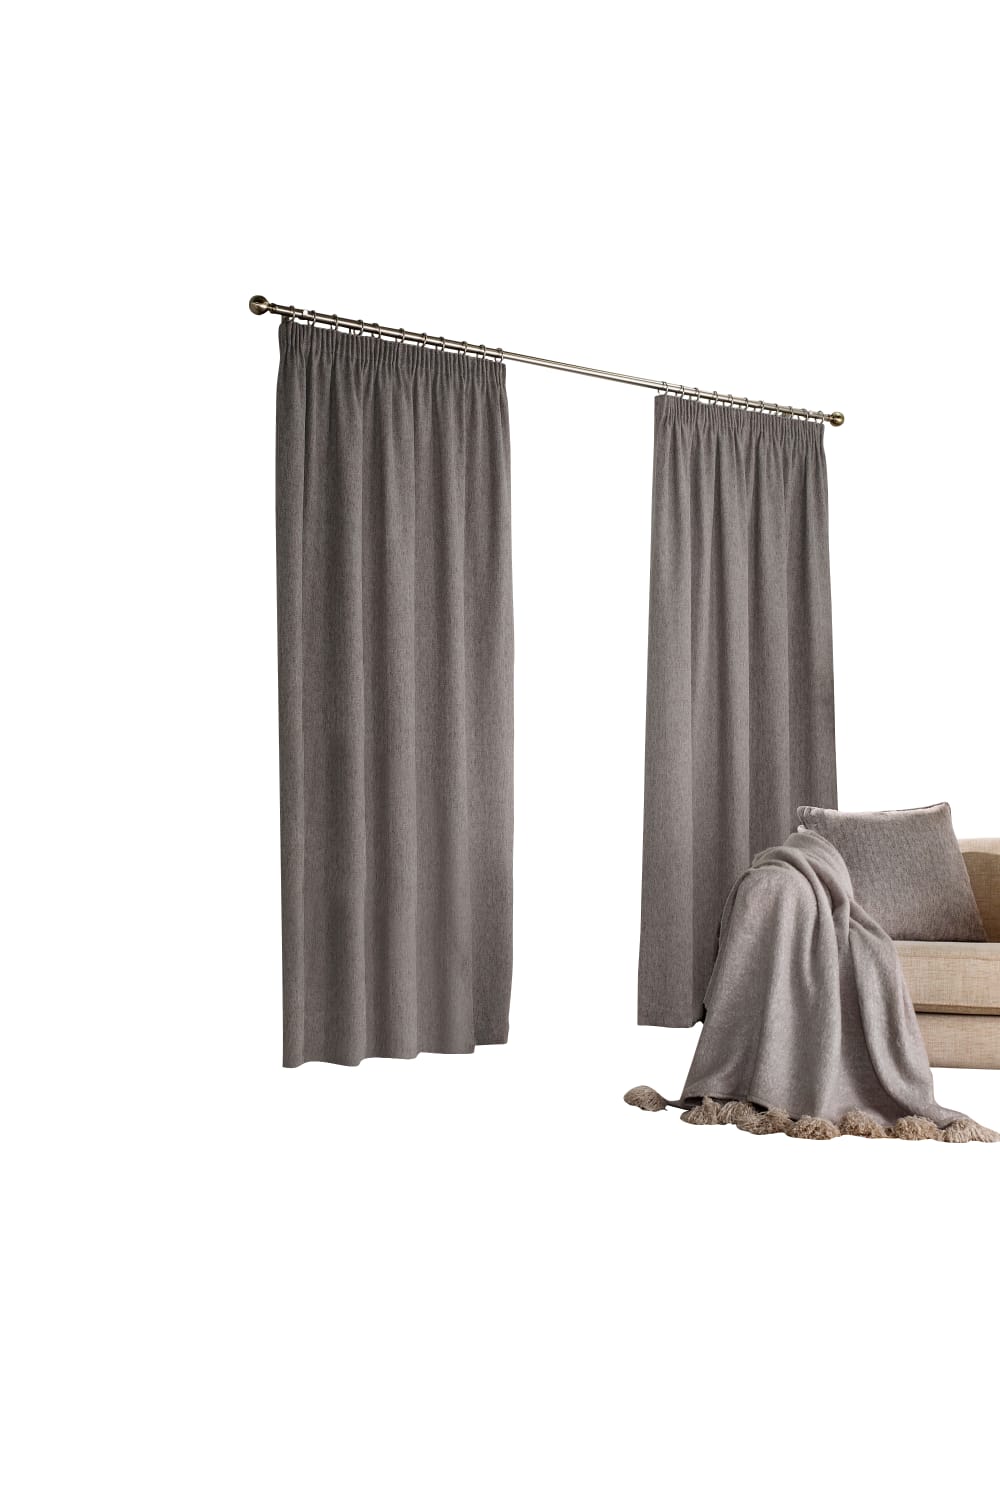 Furn Harrison Pencil Pleat Faux Wool Curtains (Pair) (Gray) (90x90in)